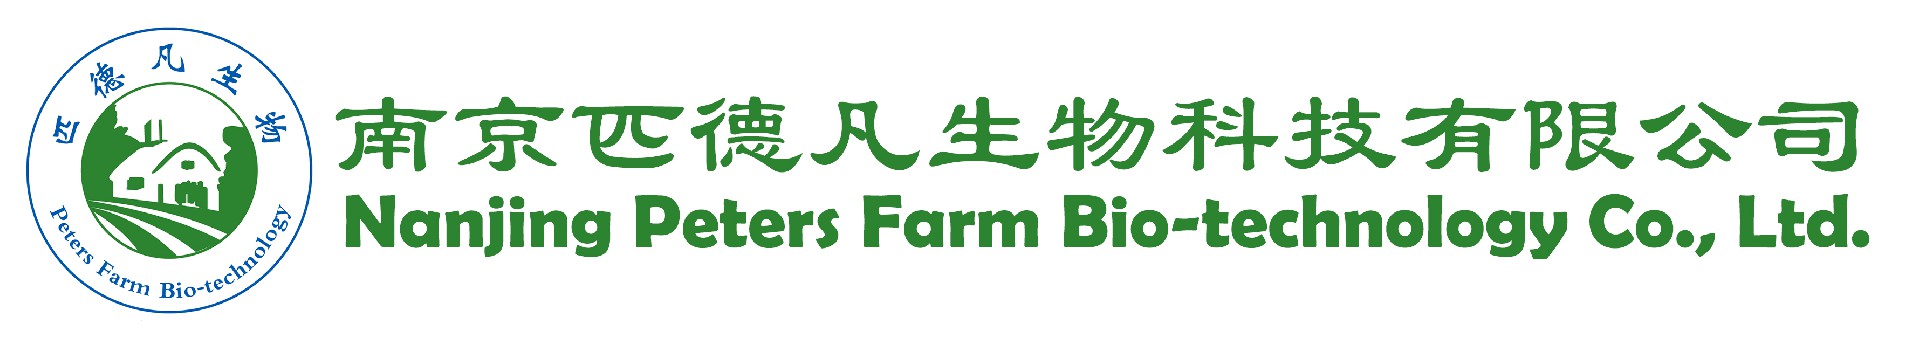 Nanjing Peters Farm Bio-technology Co., Ltd.